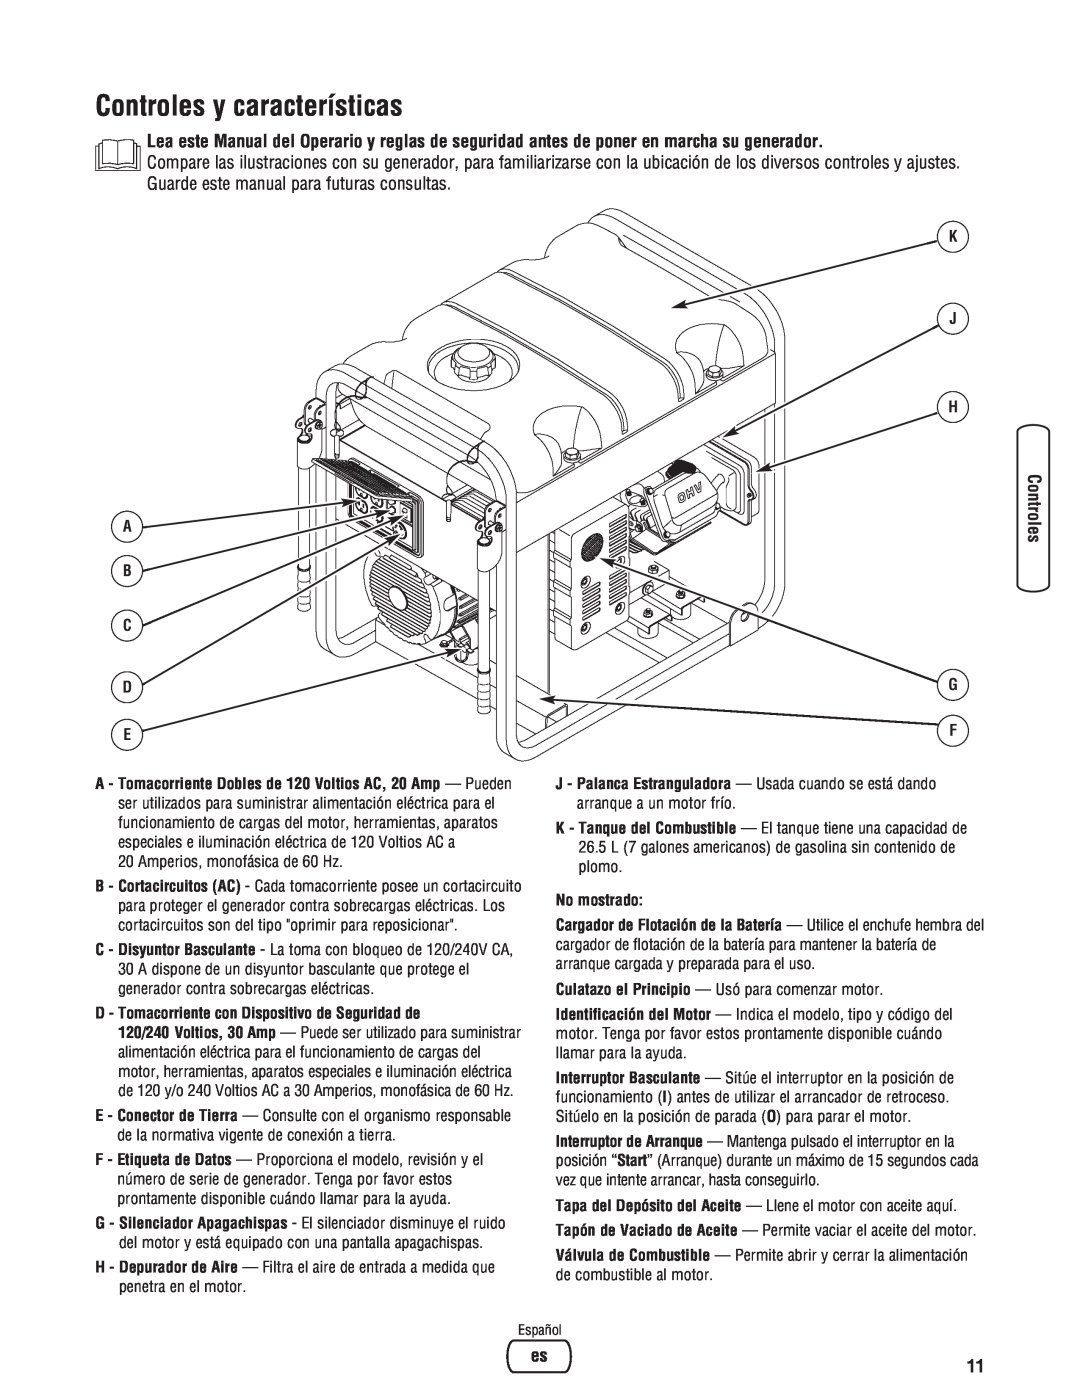 Briggs & Stratton 8000 Watt Portable Generator manual Controles y características, A B C D E, K J H G F, No mostrado 